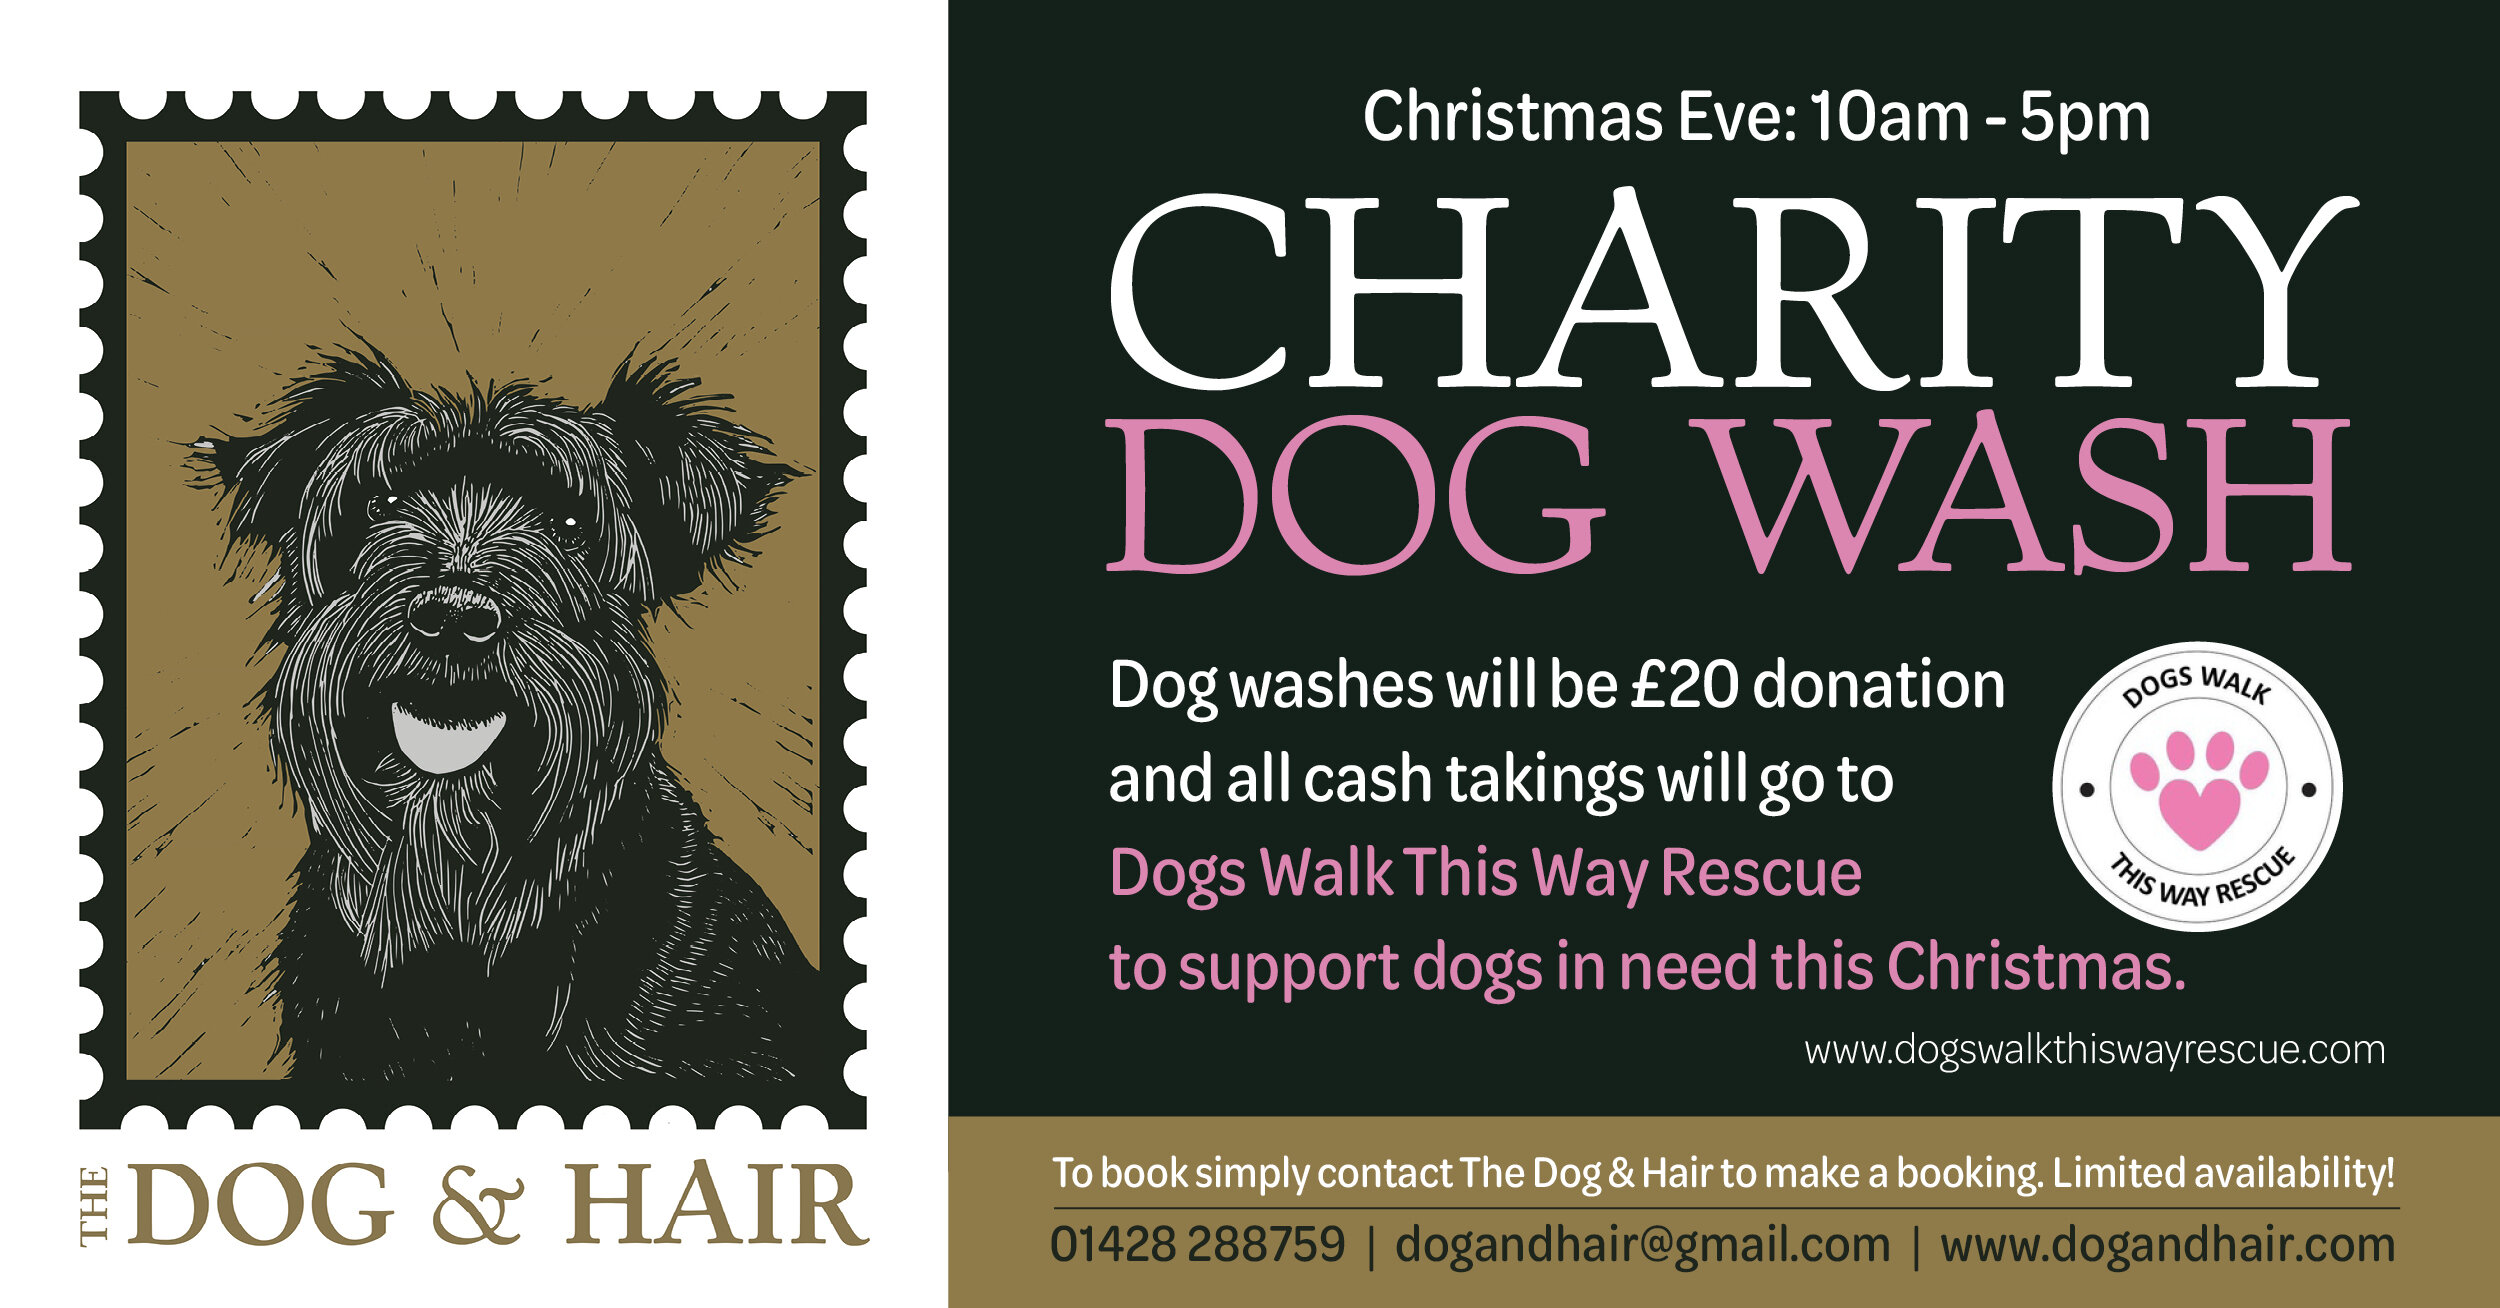 The Dog & Hair_Charity dog wash Facebook post_Dec19.jpg